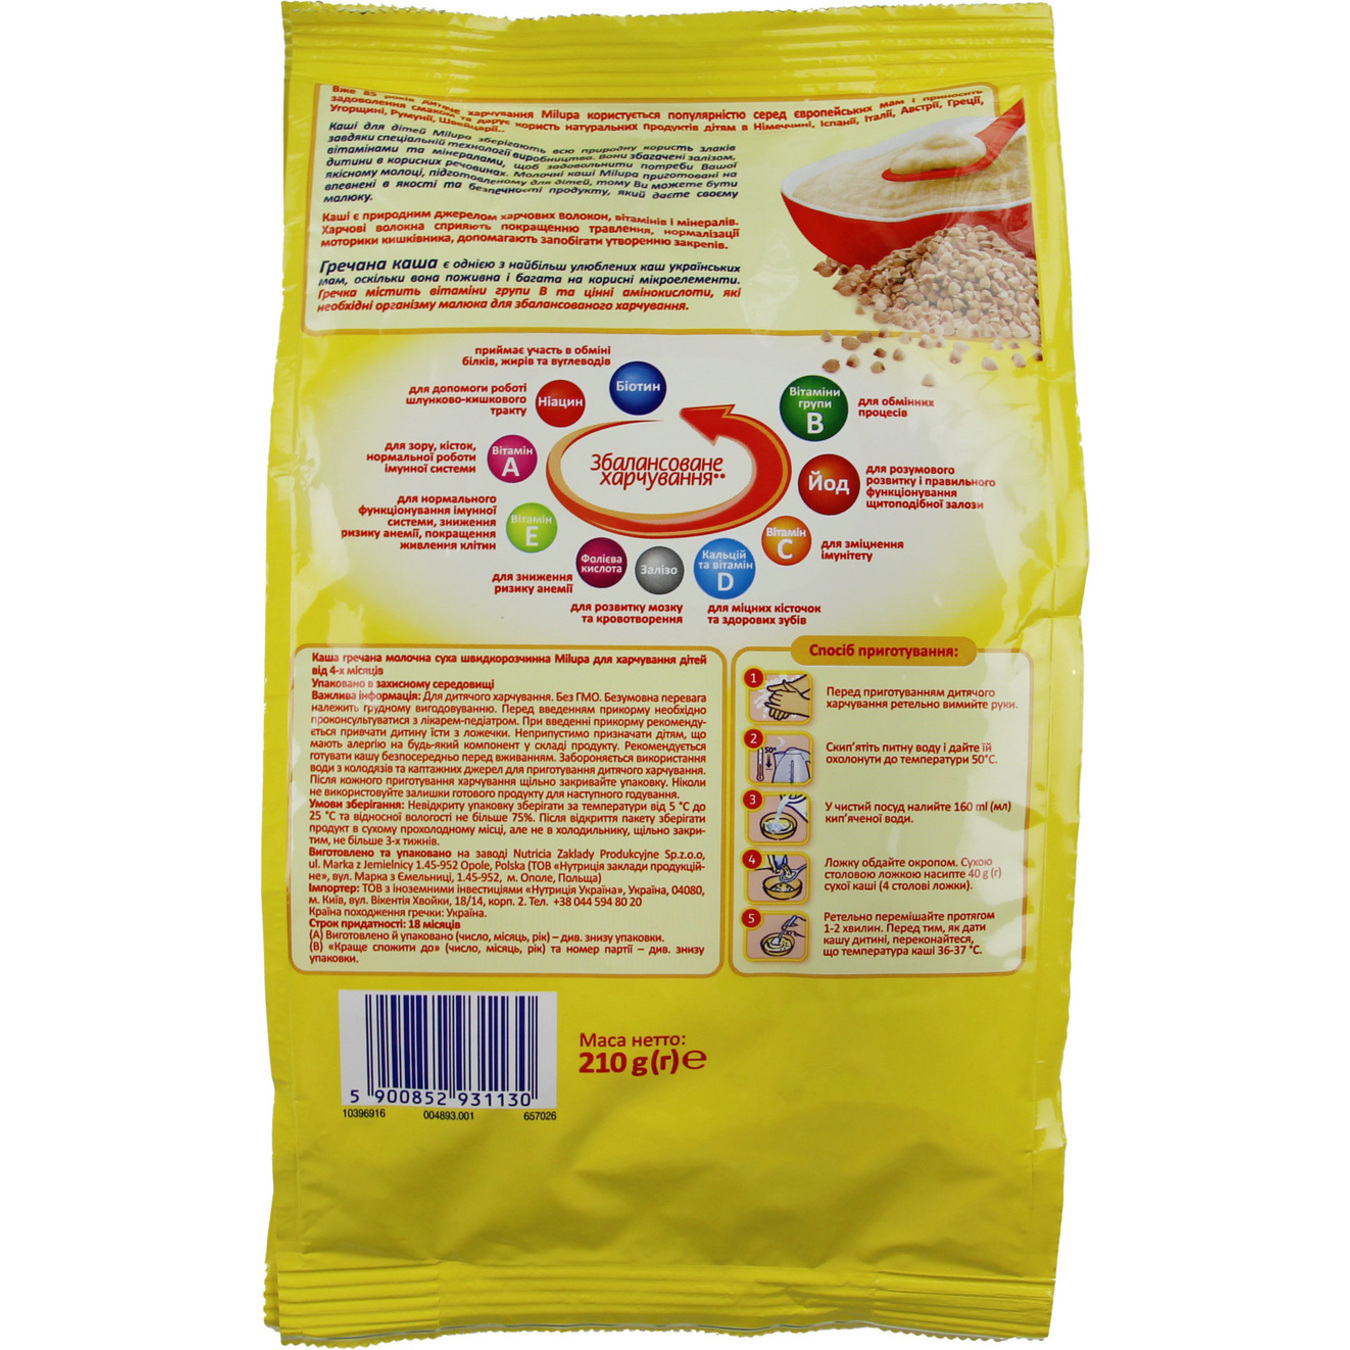 Milupa for children from 4 months milk buckwheat porridge 210g 2